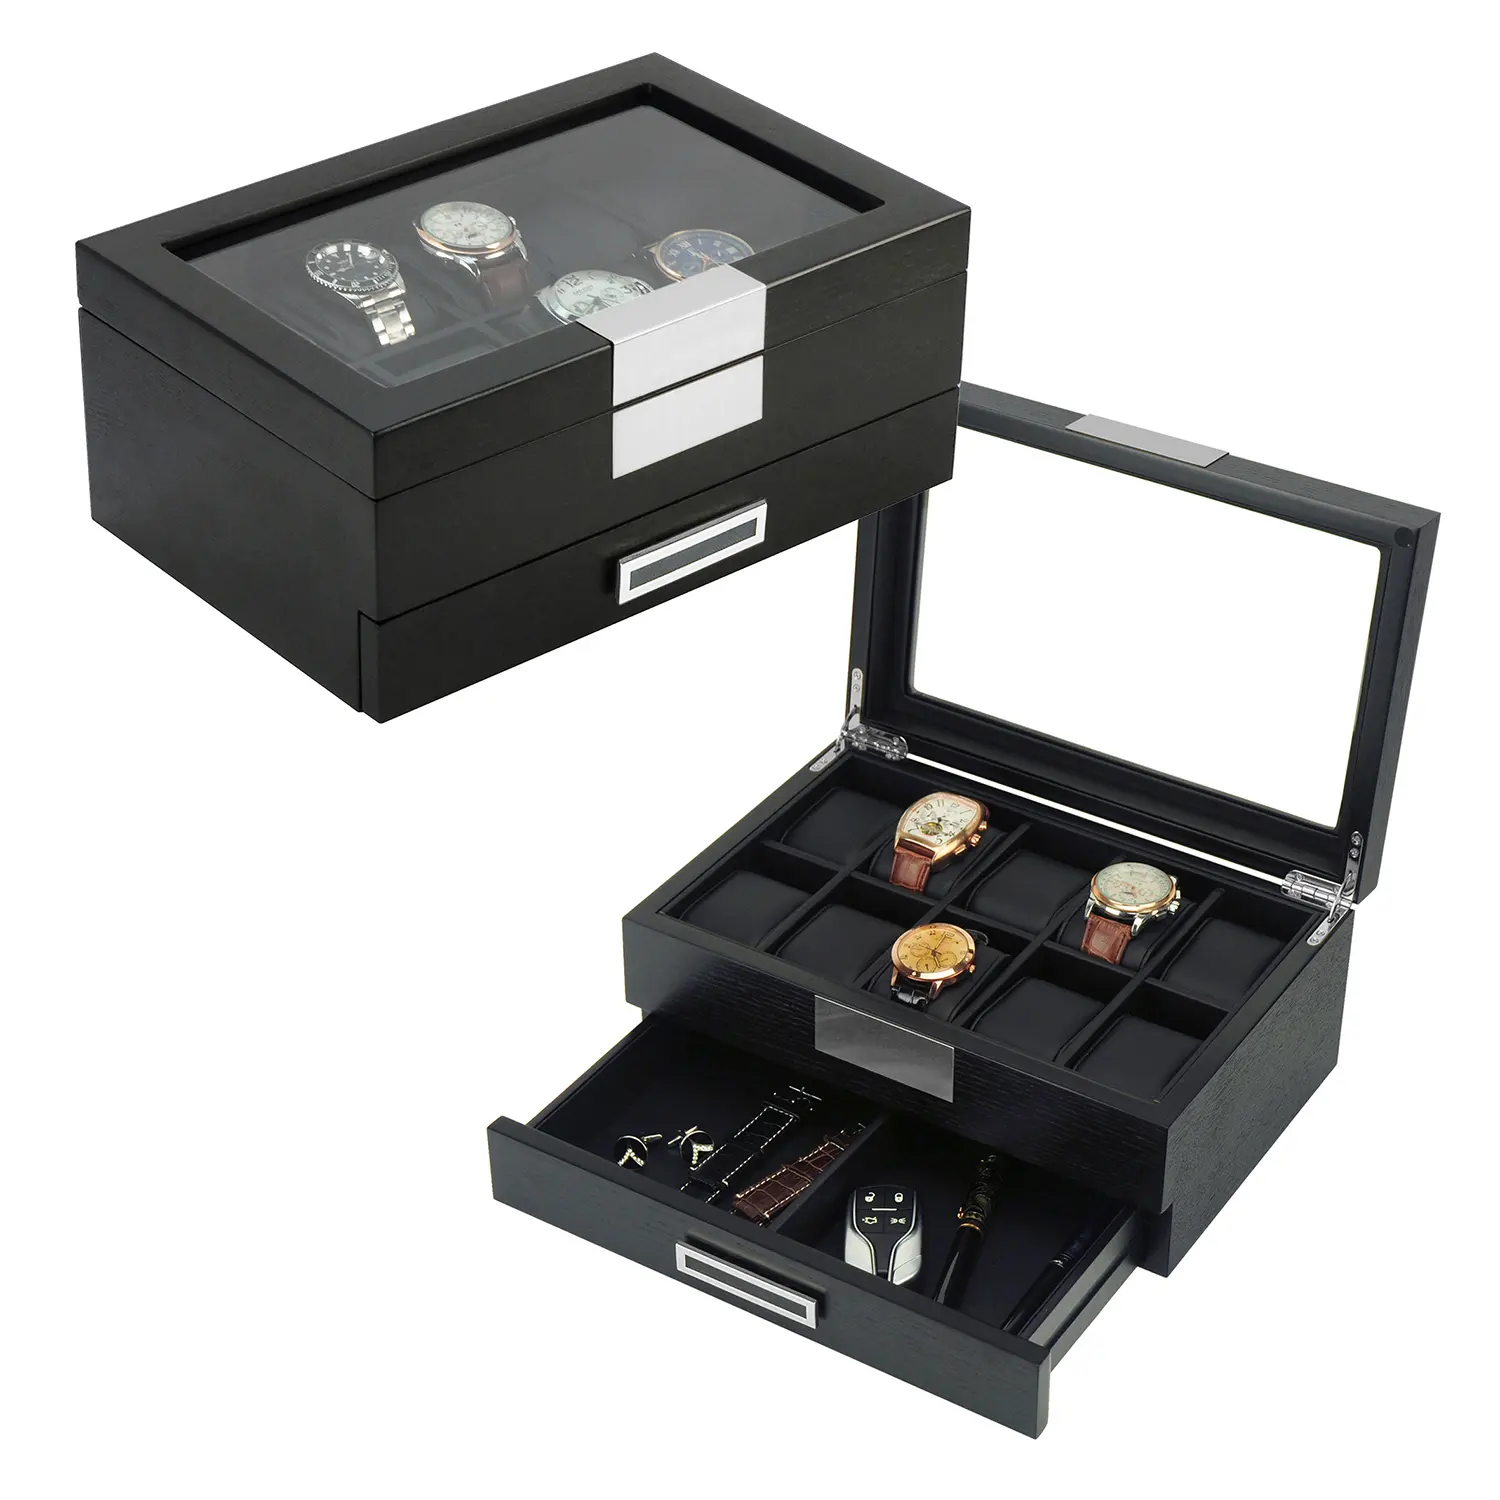 Sonny Caja de reloj Uhrenbox fancy engraved for him drawer double designer watch box